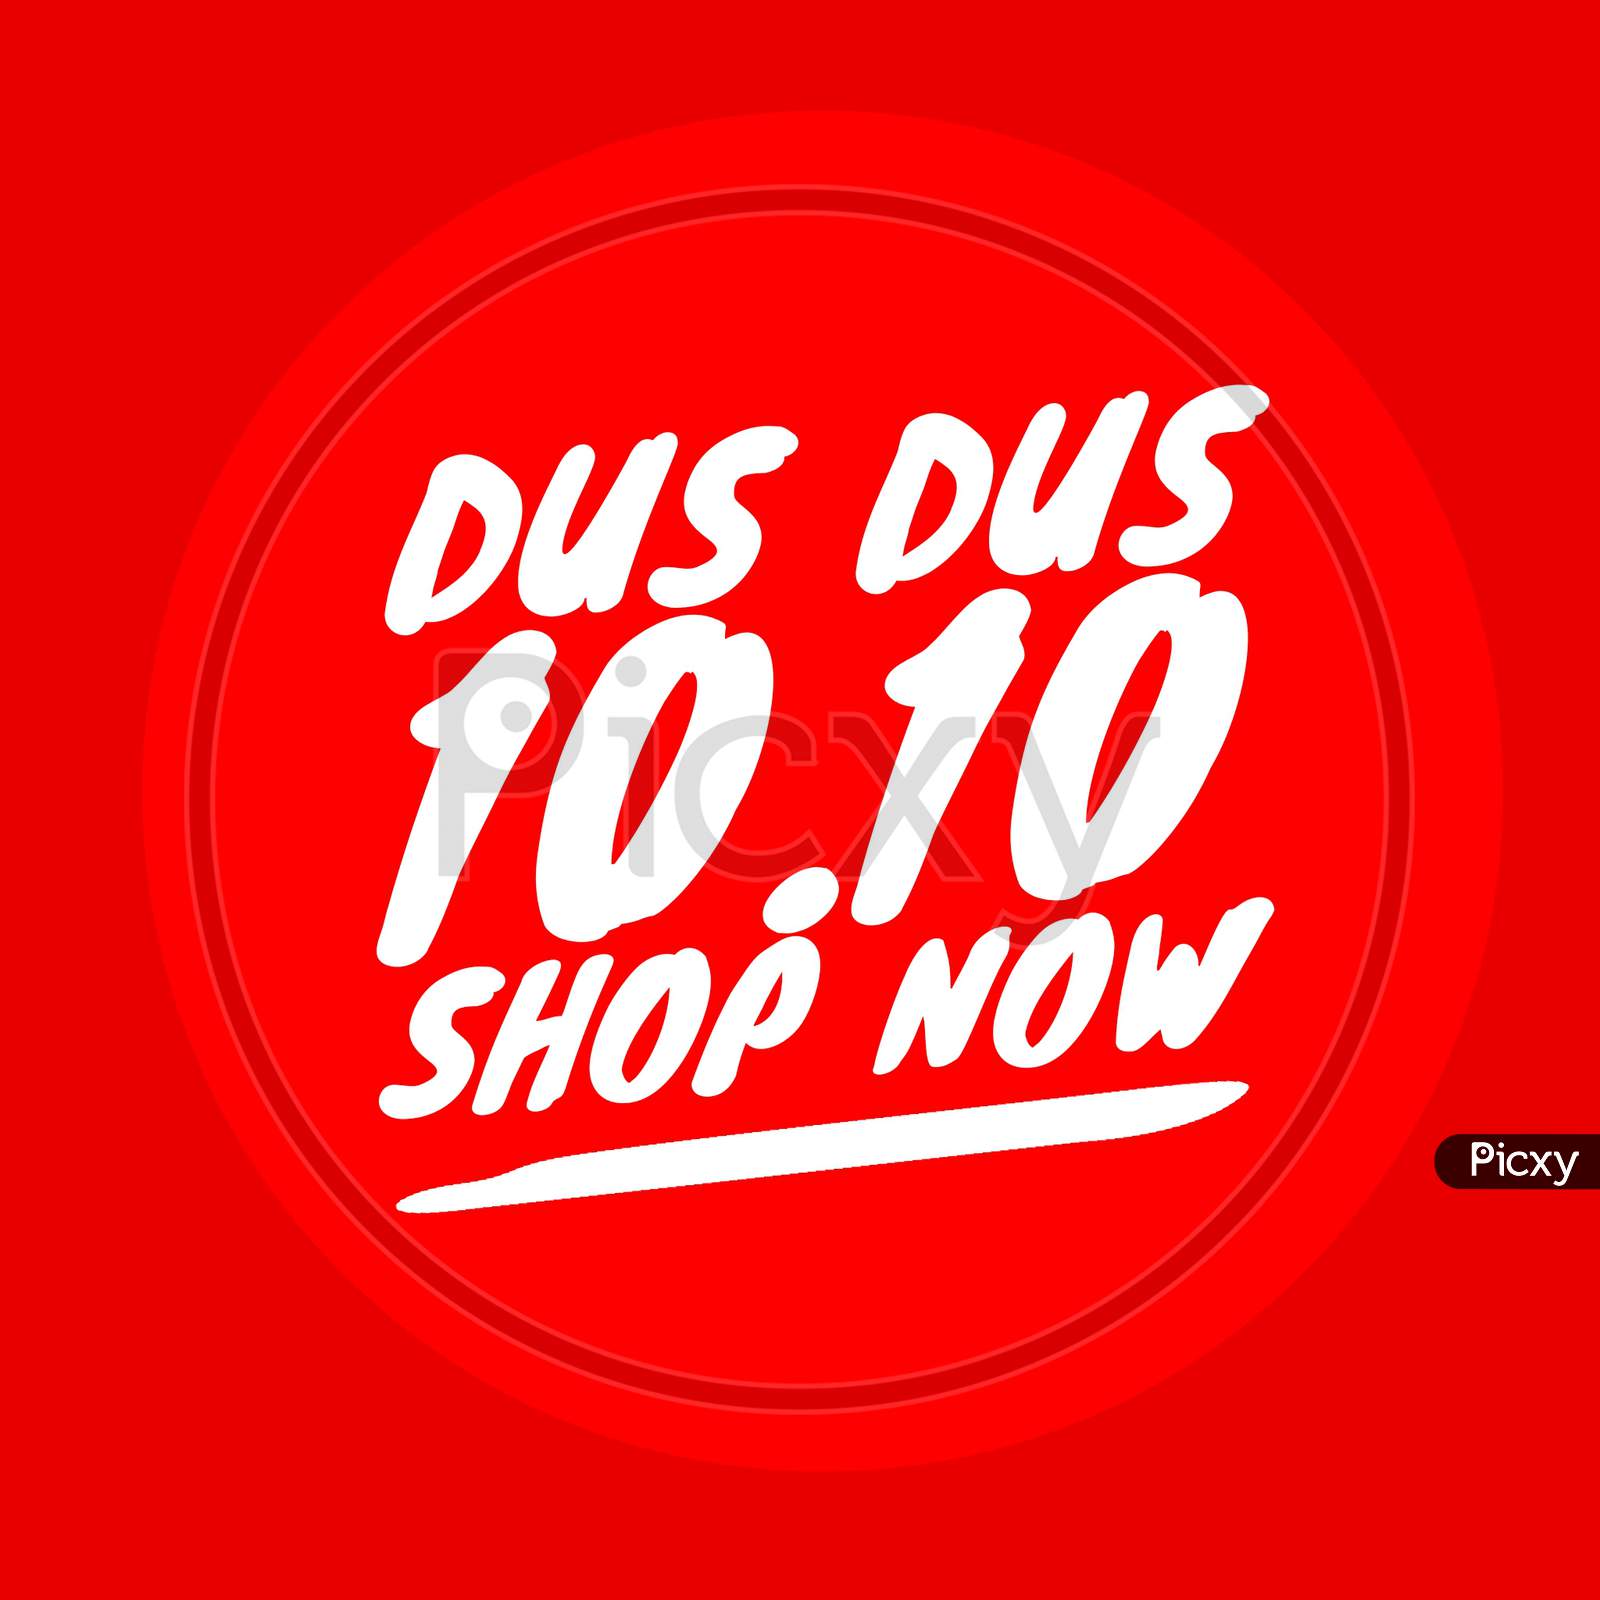 Image With A Text "Dus Dus 10.10 Shop Now"